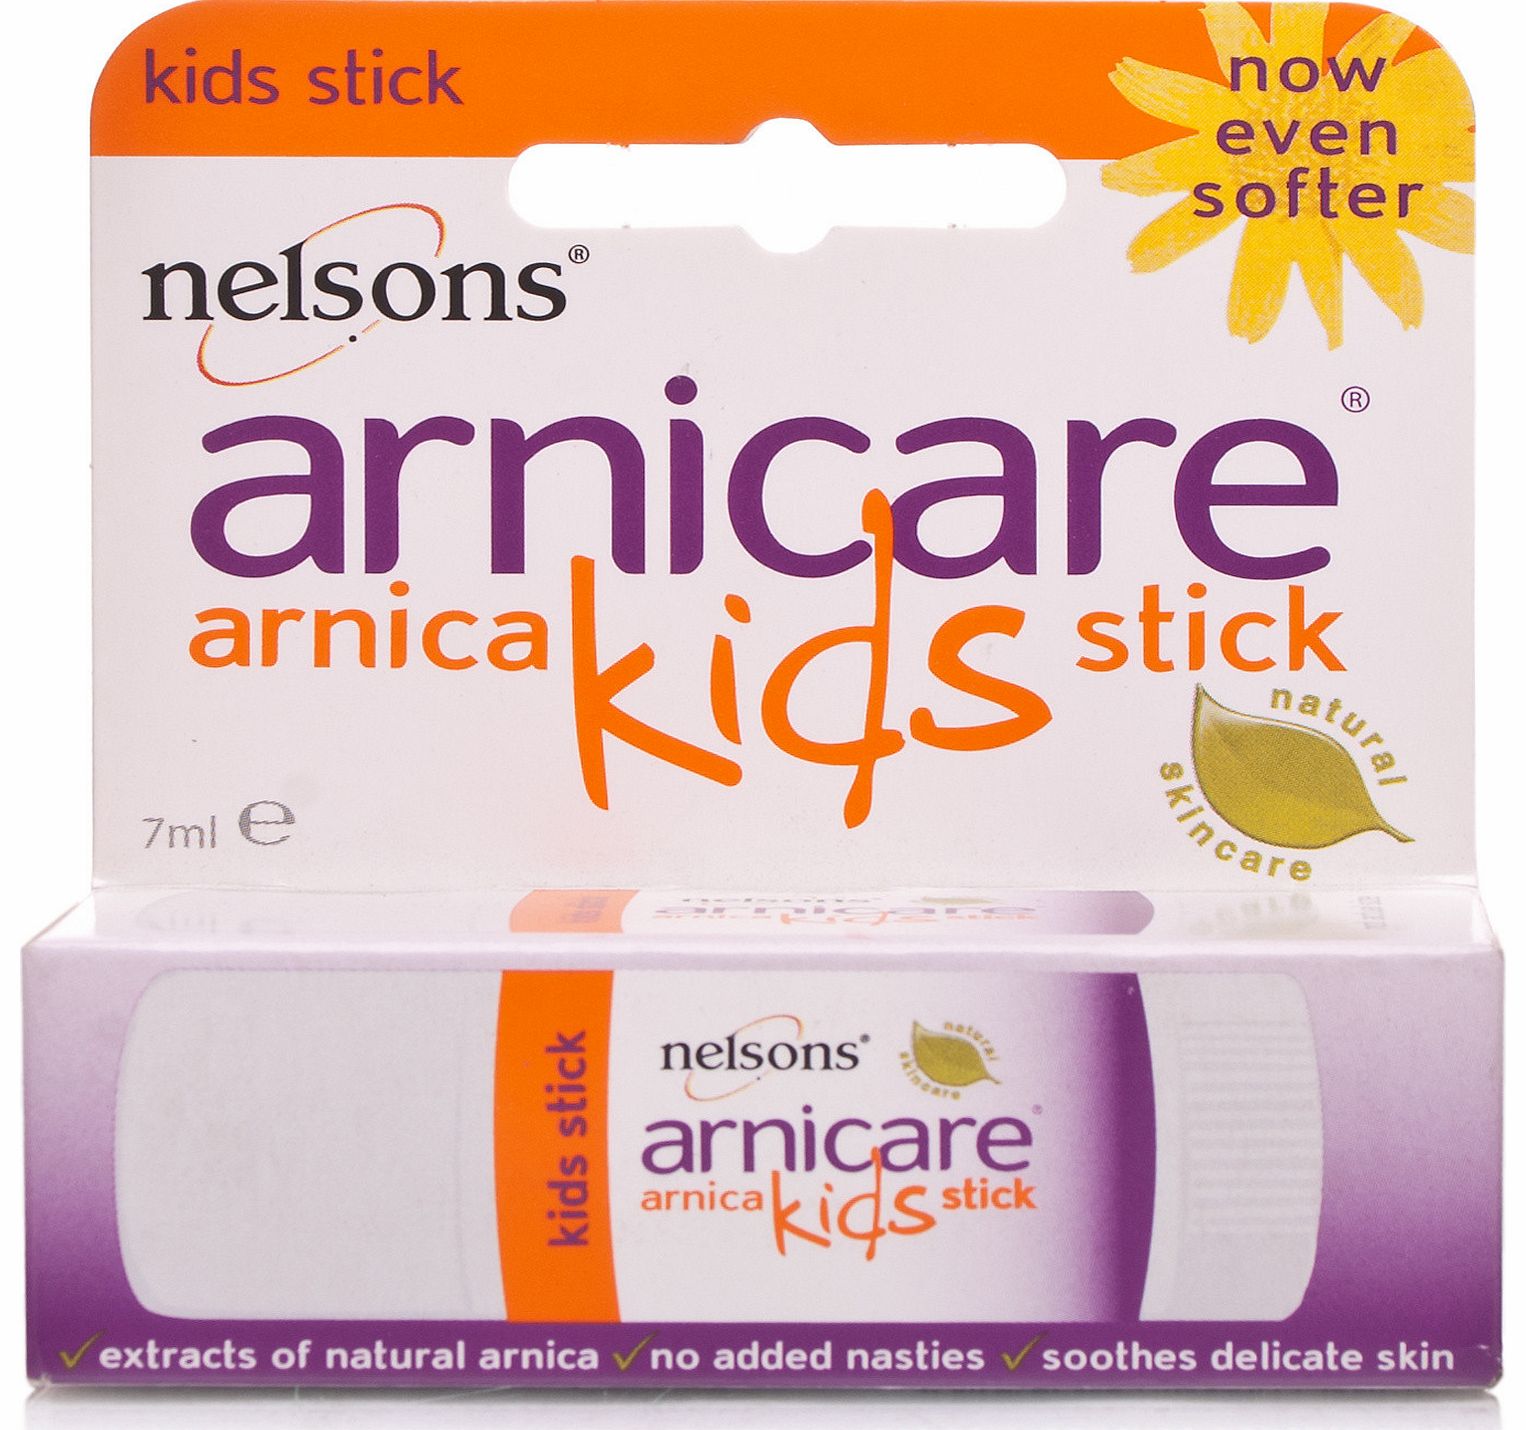 Nelsons Arnicare Arnica Kids Stick